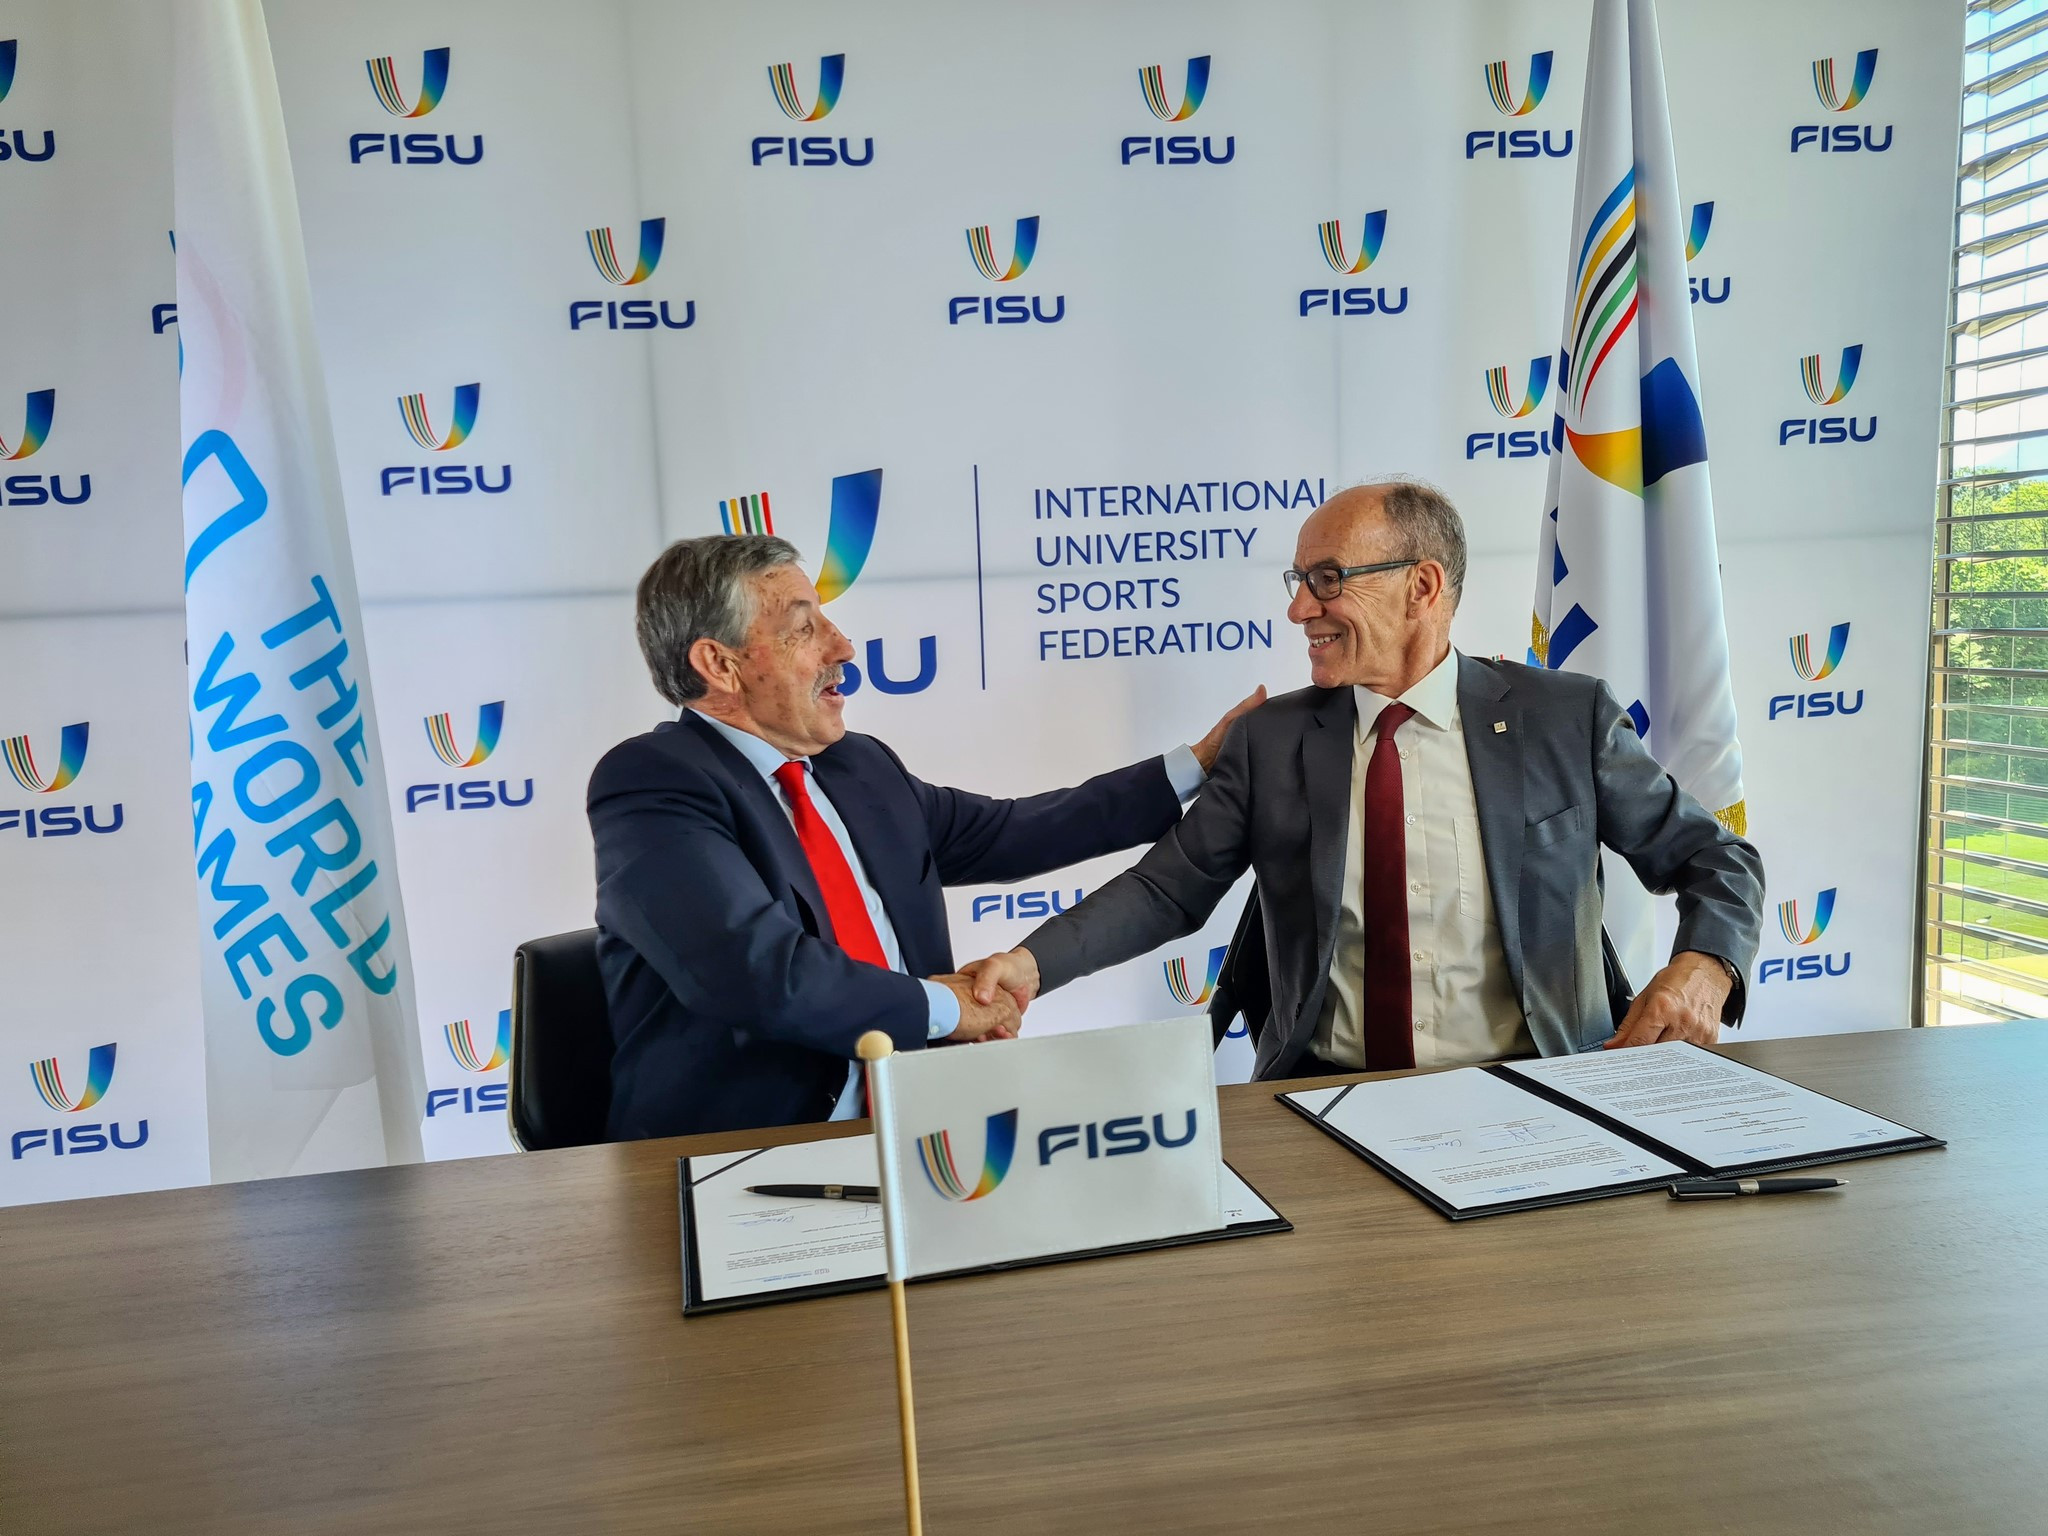 FISU and IWGA Presidents sign Memorandum of Understanding to improve cooperation